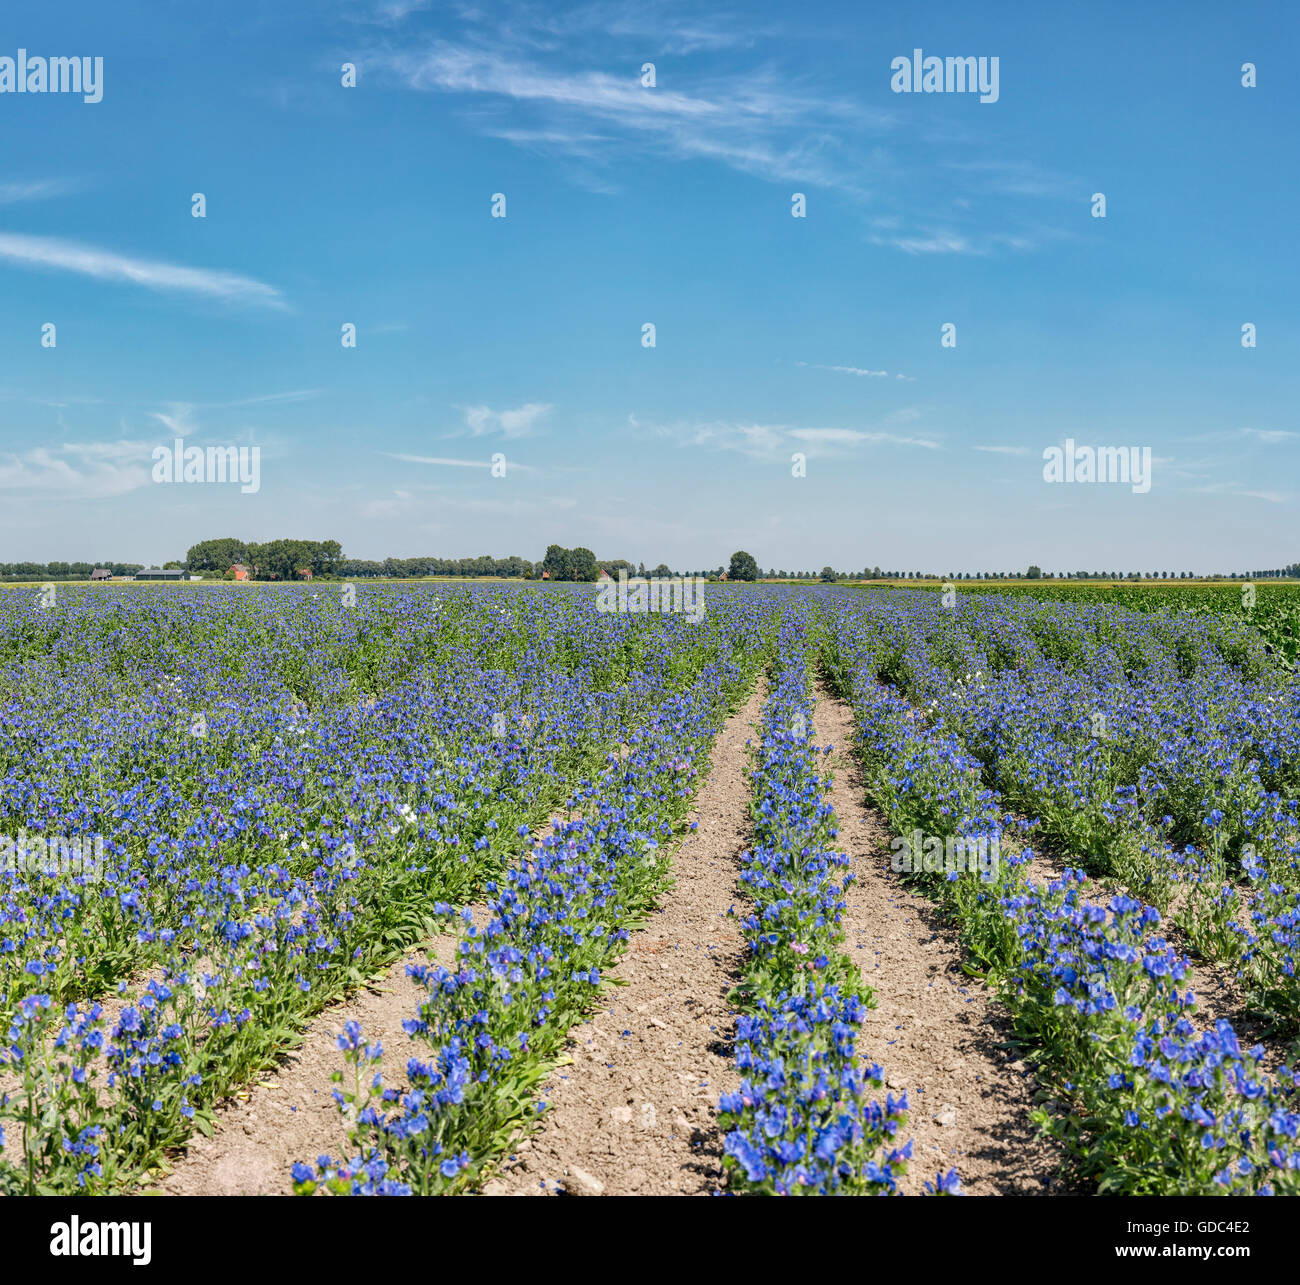 Sint-Maartensdijk,Zeeland,flores azules cultivadas en fila tras fila Foto de stock